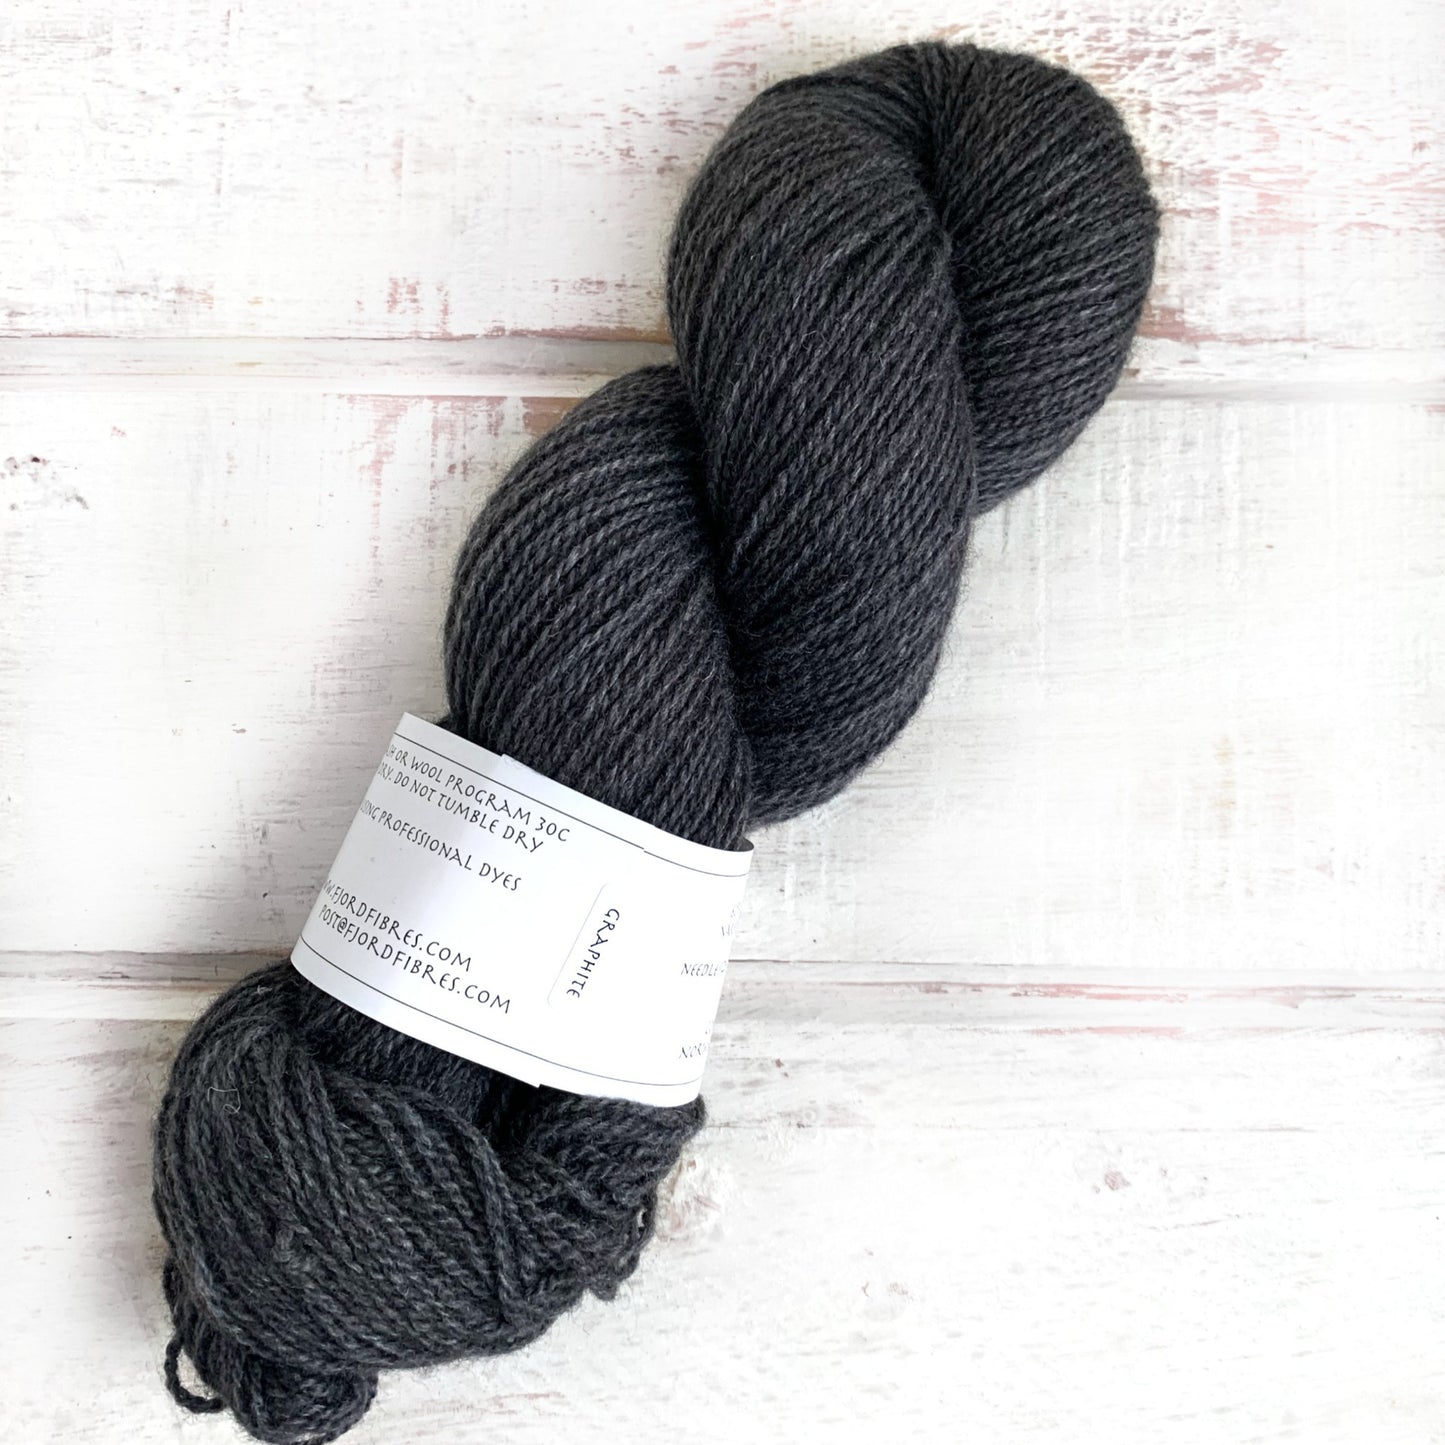 Graphite - Trollfjord sock - Hand Dyed Yarn - Tonal Yarn